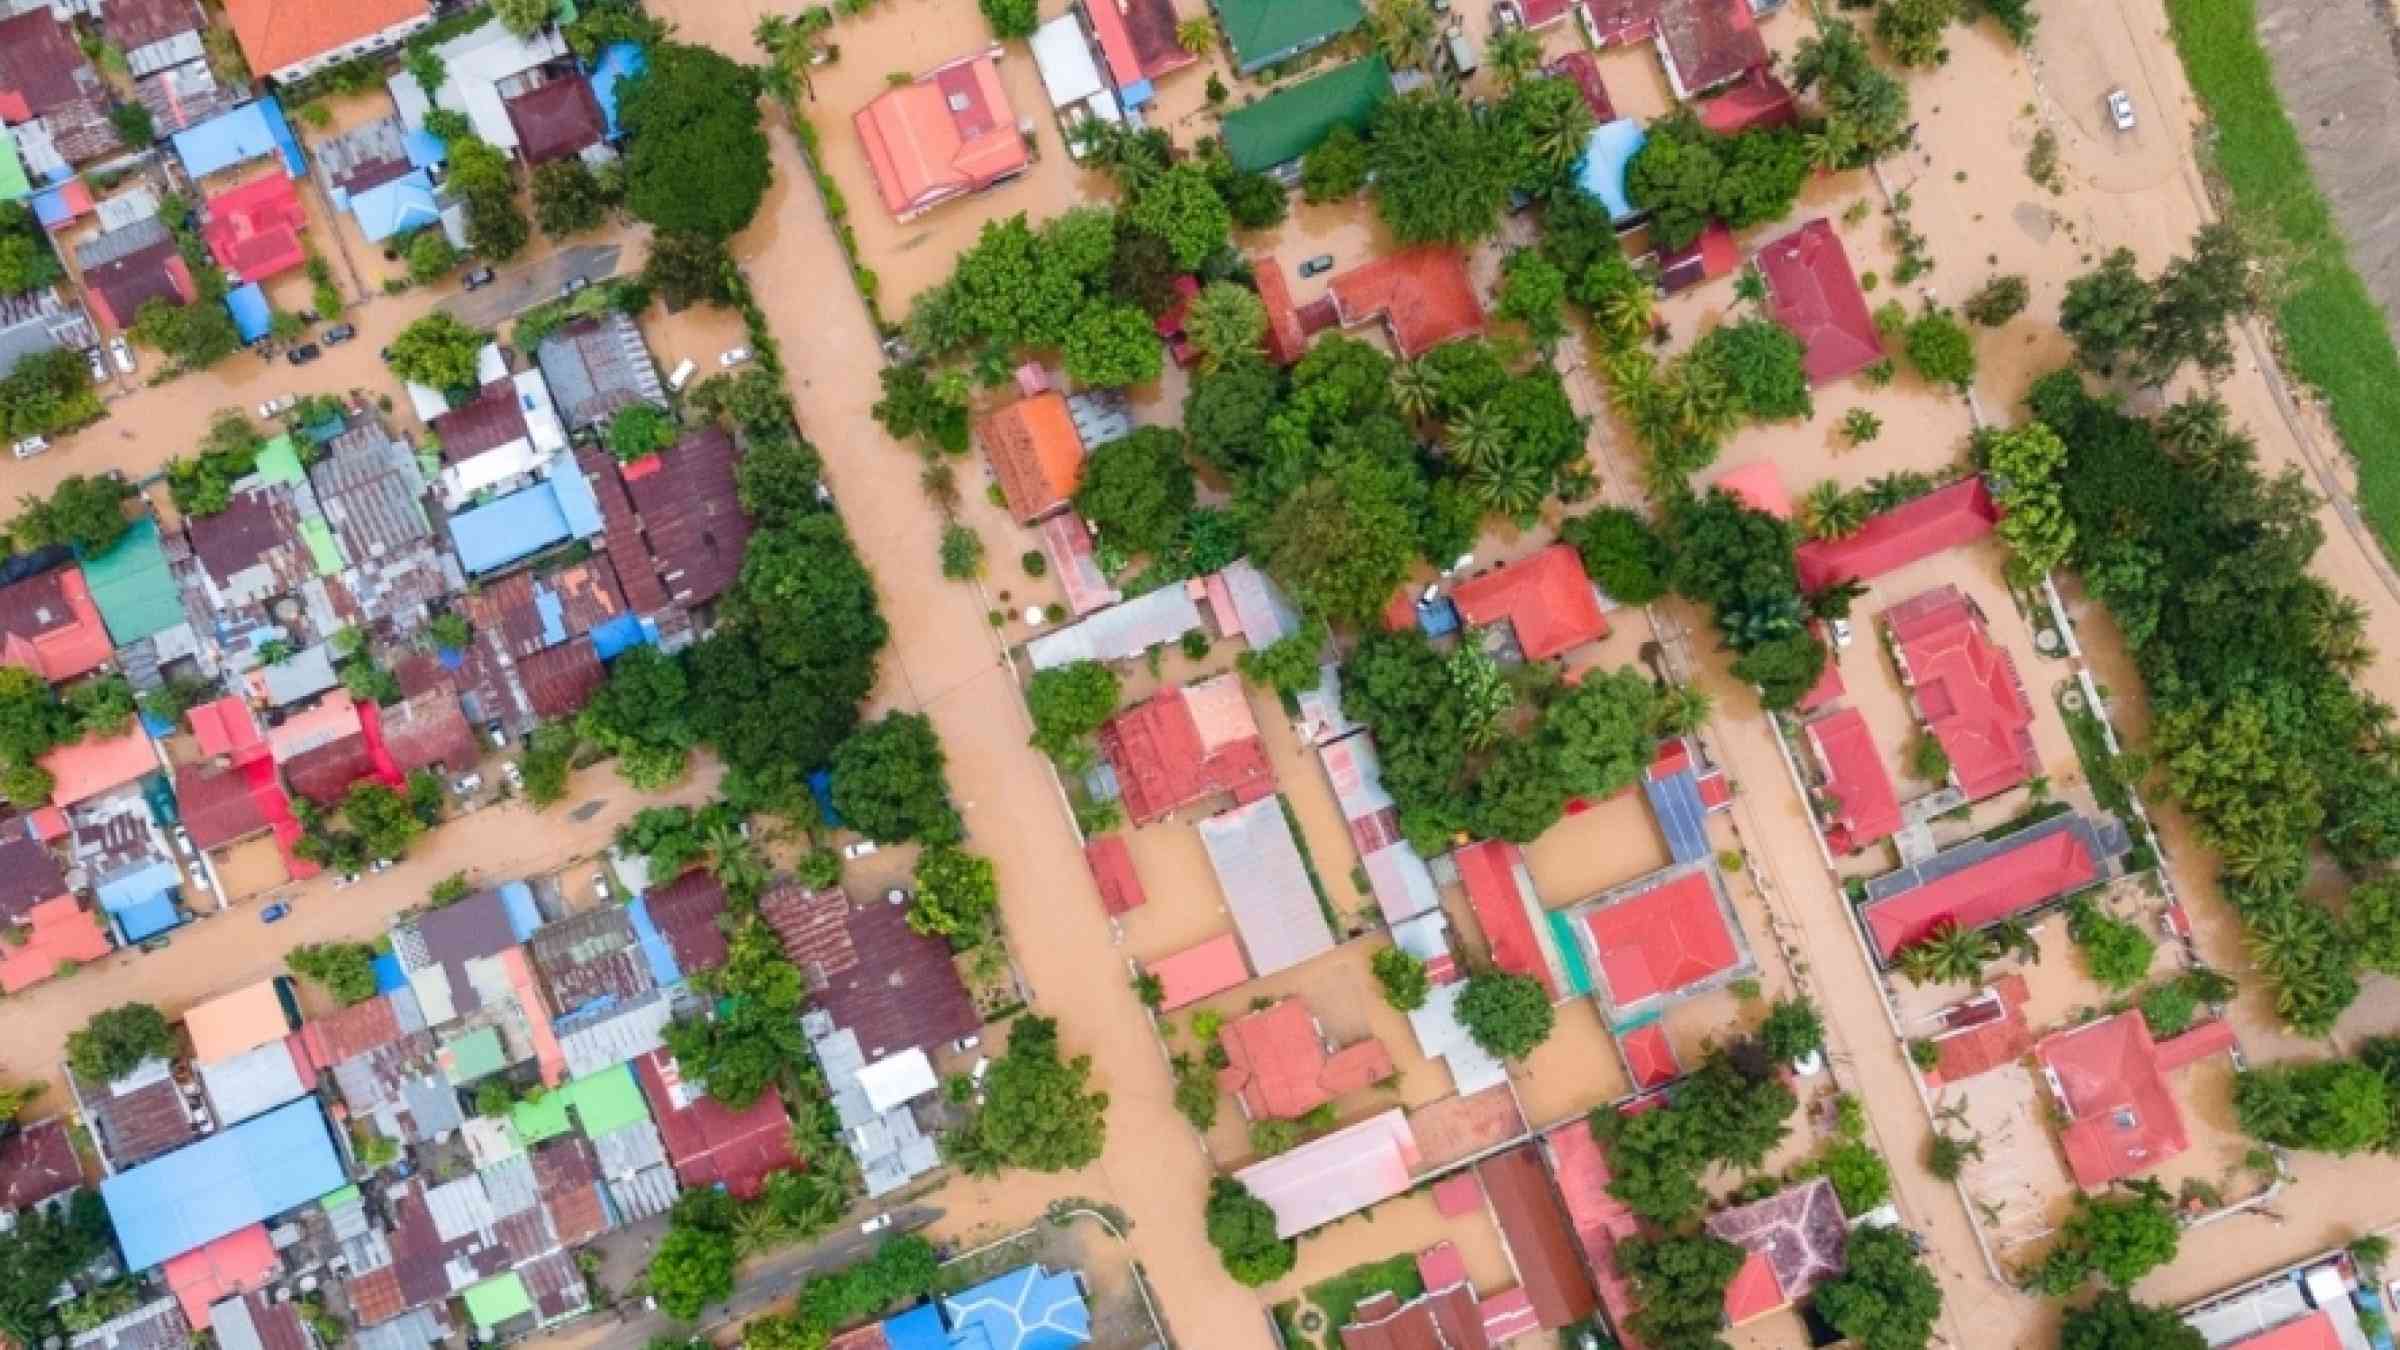 Dili, Timor-Leste inundated with flood waters following Cyclone Seroja